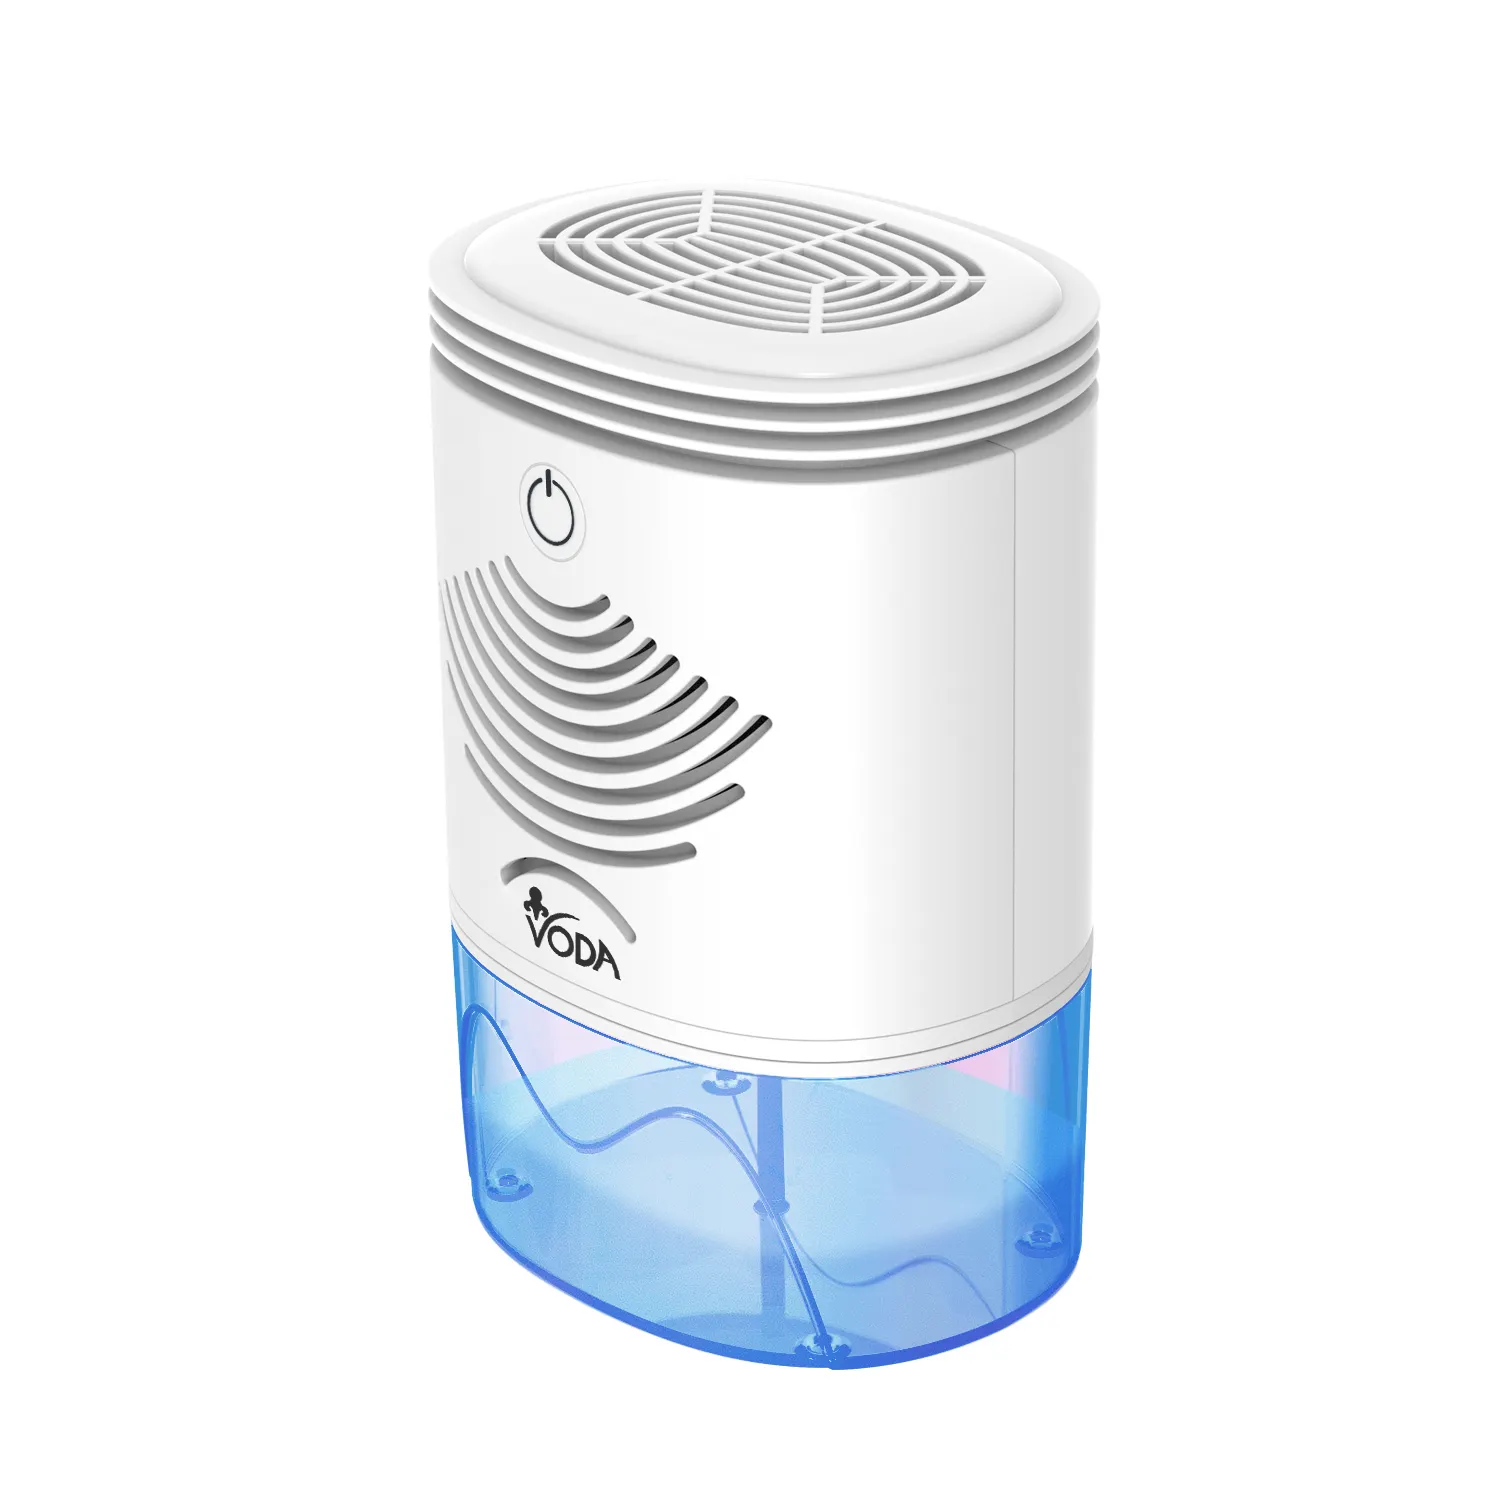 VODA Portable Dehumidifier Wireless Household Portable Air Dehumidifier Mini Dehumidifi Home